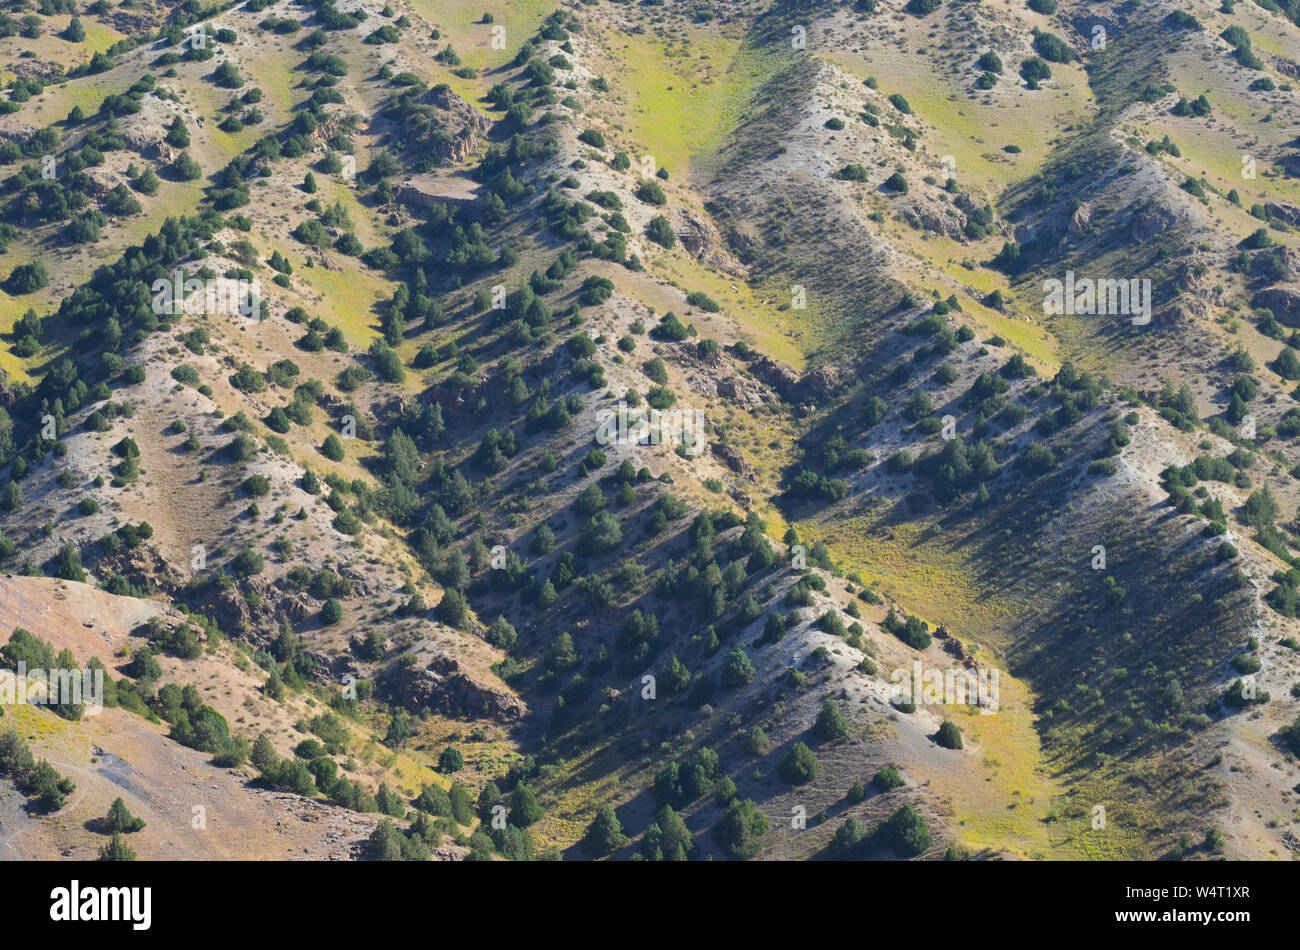 Hissar or Gissar mountains, a nature reserve within the Pamir-Alay range, southeastern Uzbekistan Stock Photo